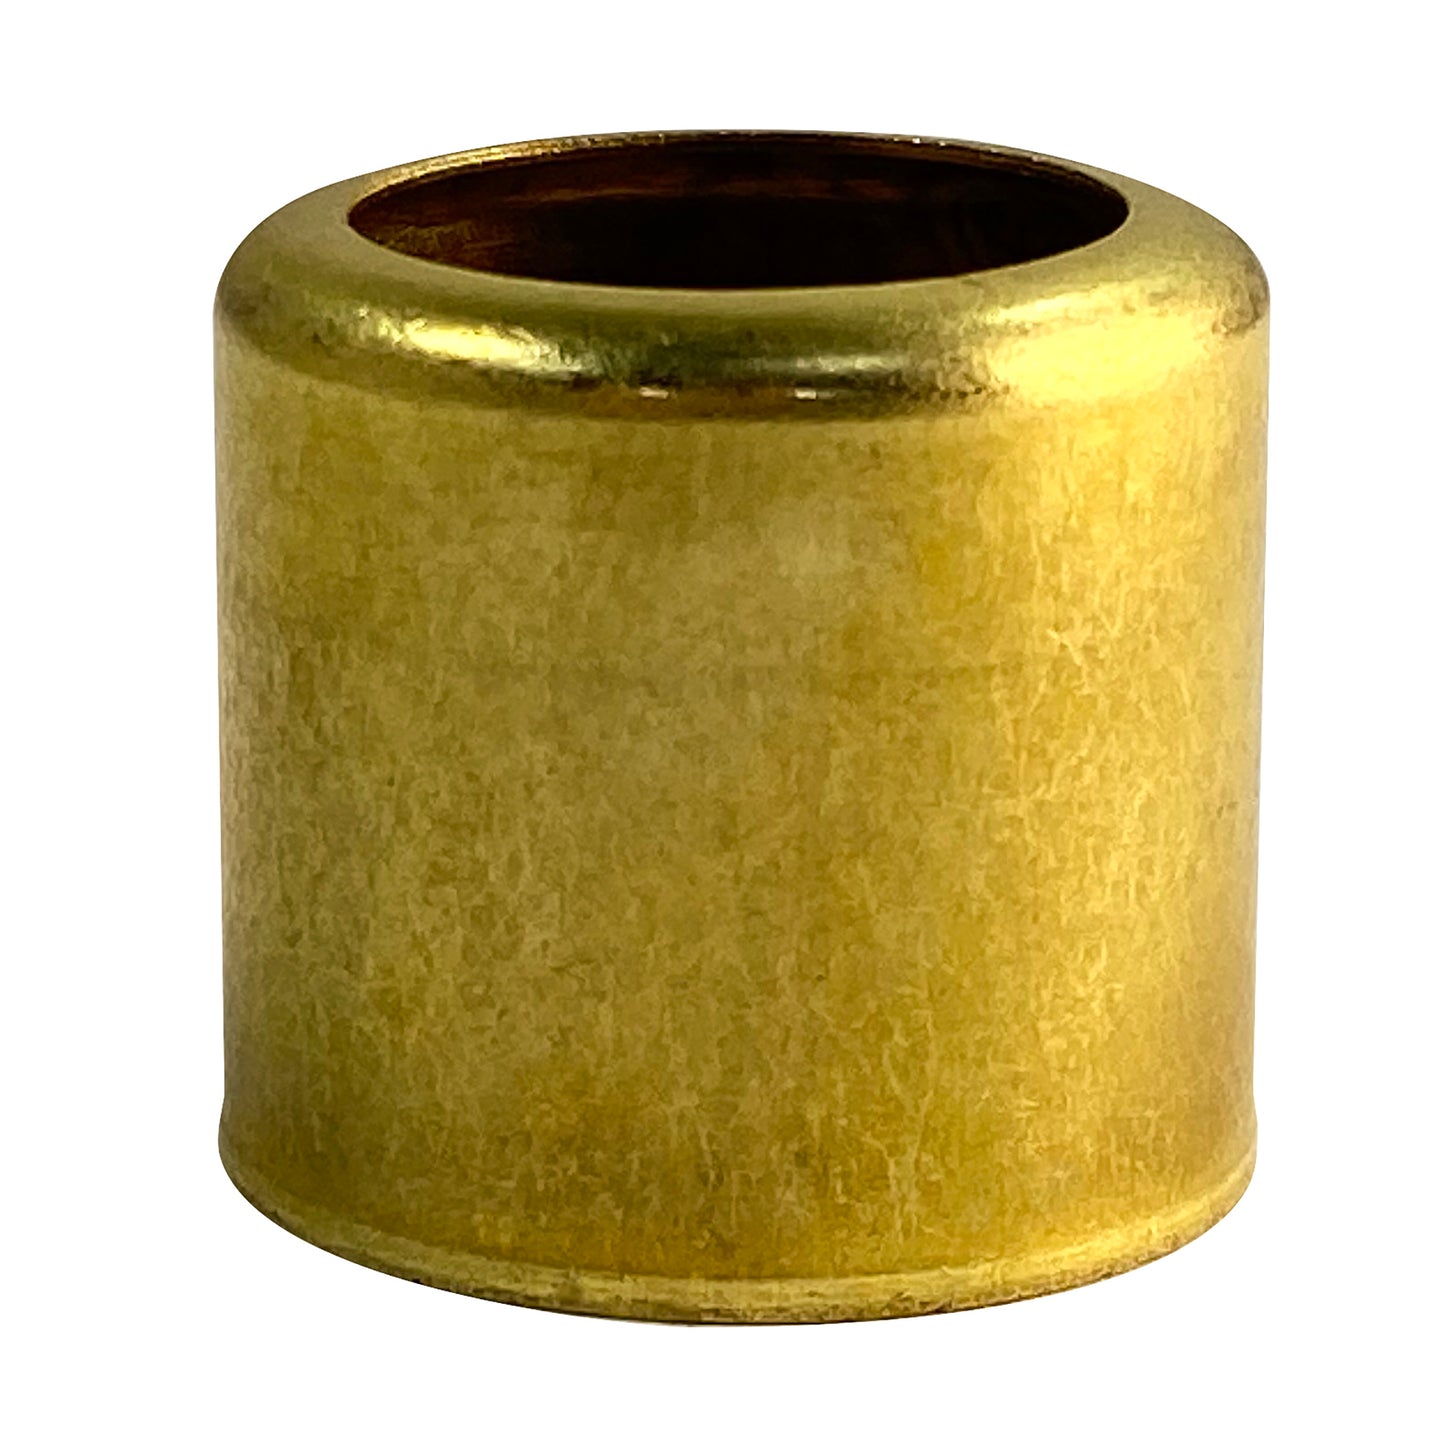 .825 - .975 I.D. Smooth Brass Ferrules